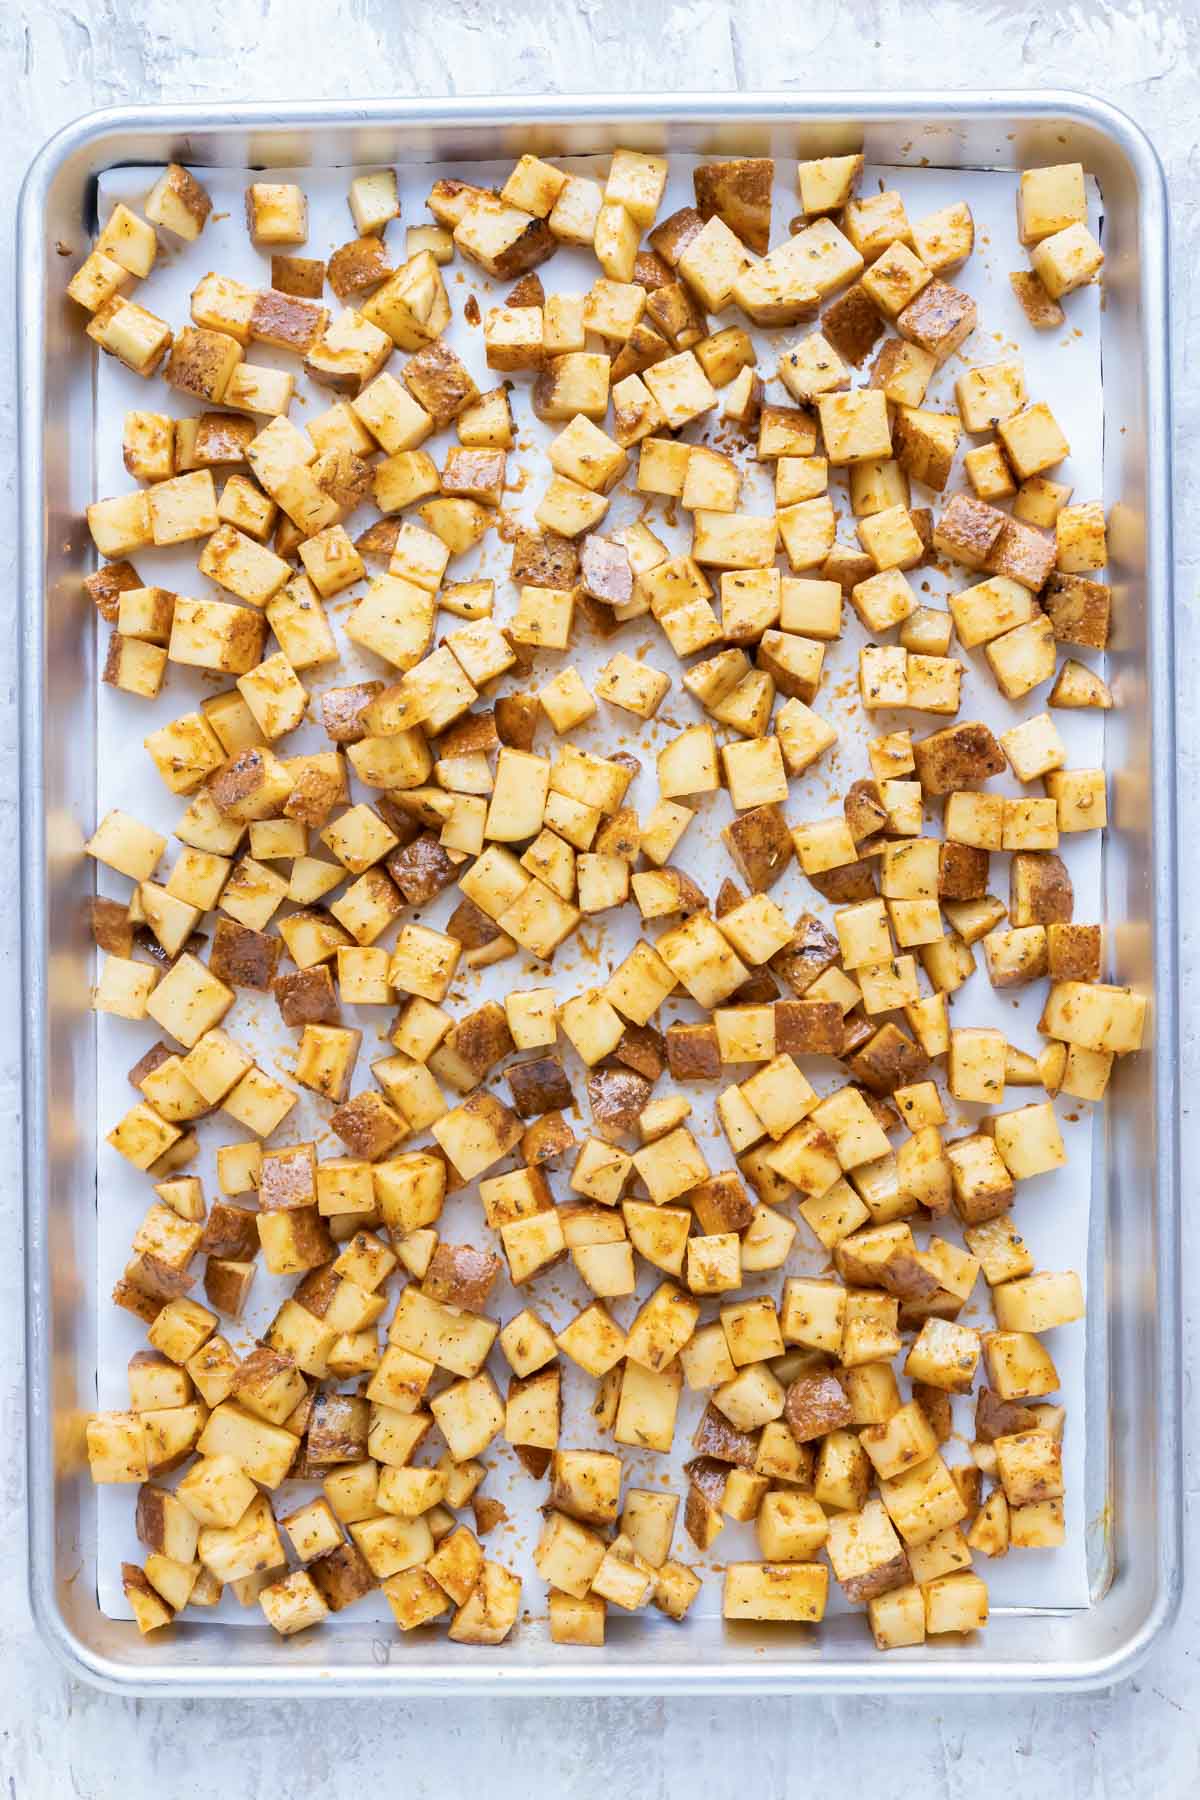 A sheet pan full of seasoned potato cubes.